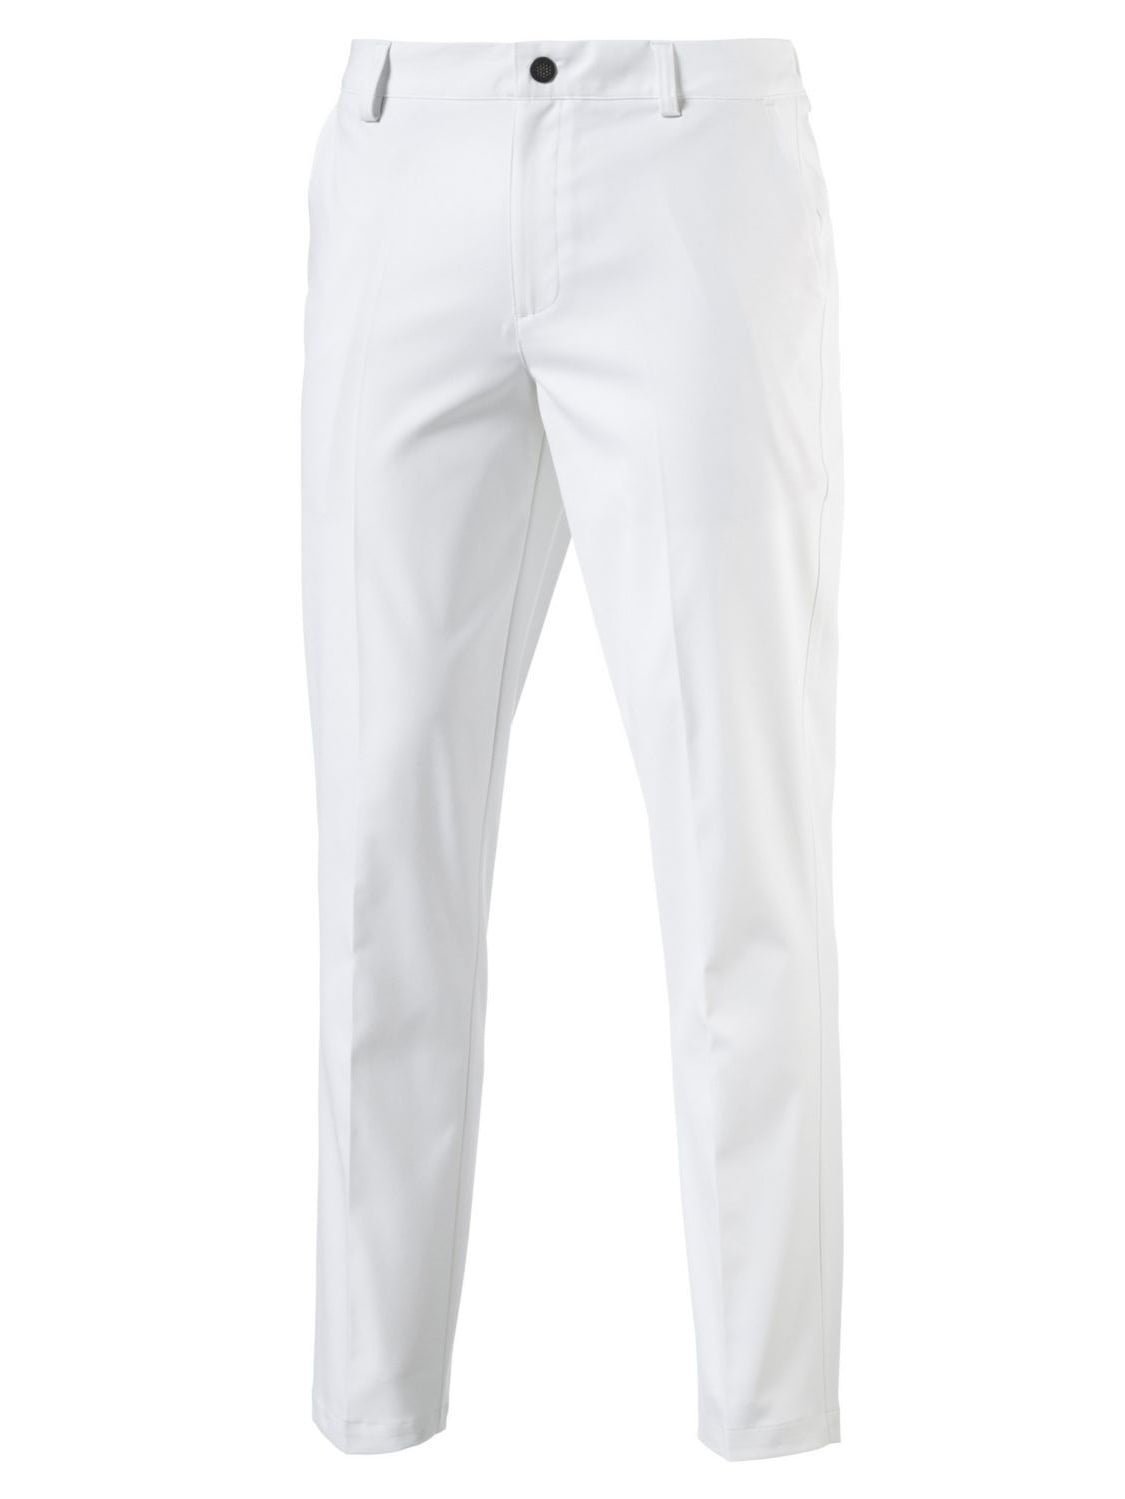 puma men's tech golf pants